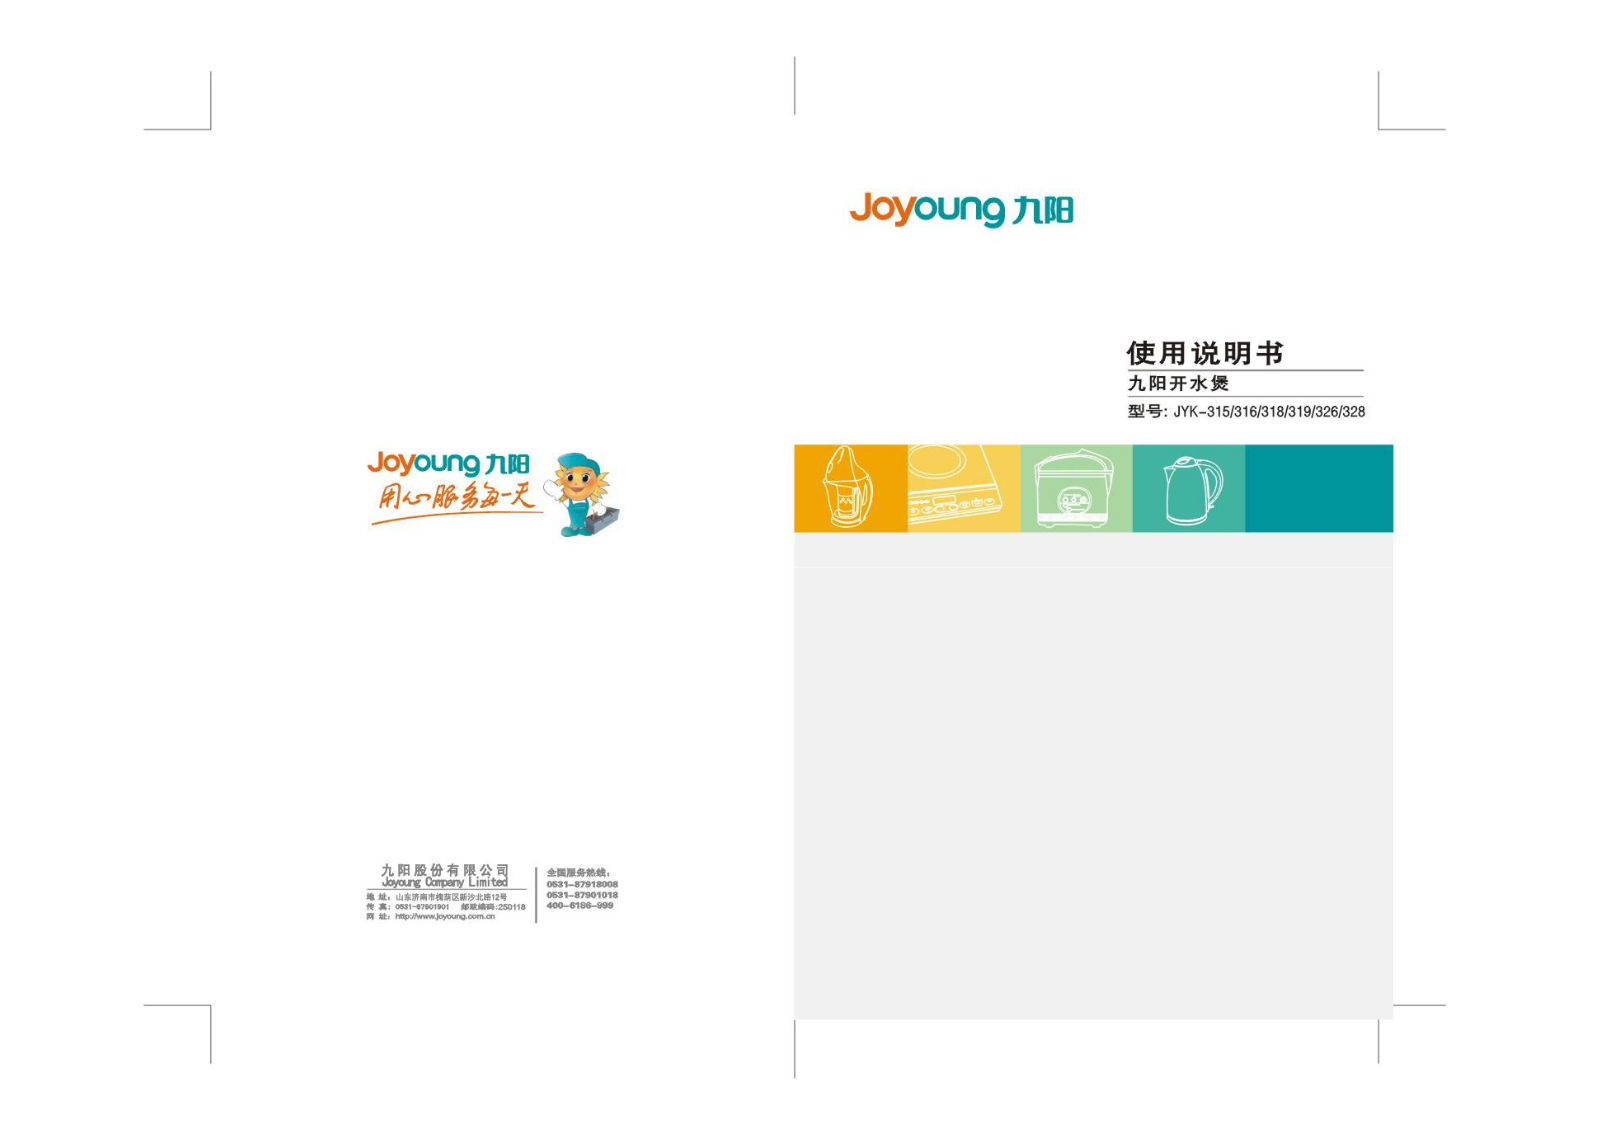 joyoung JYK-315, JYK-316, JYK-318, JYK-319, JYK-326 OPERATION INSTRUCTION